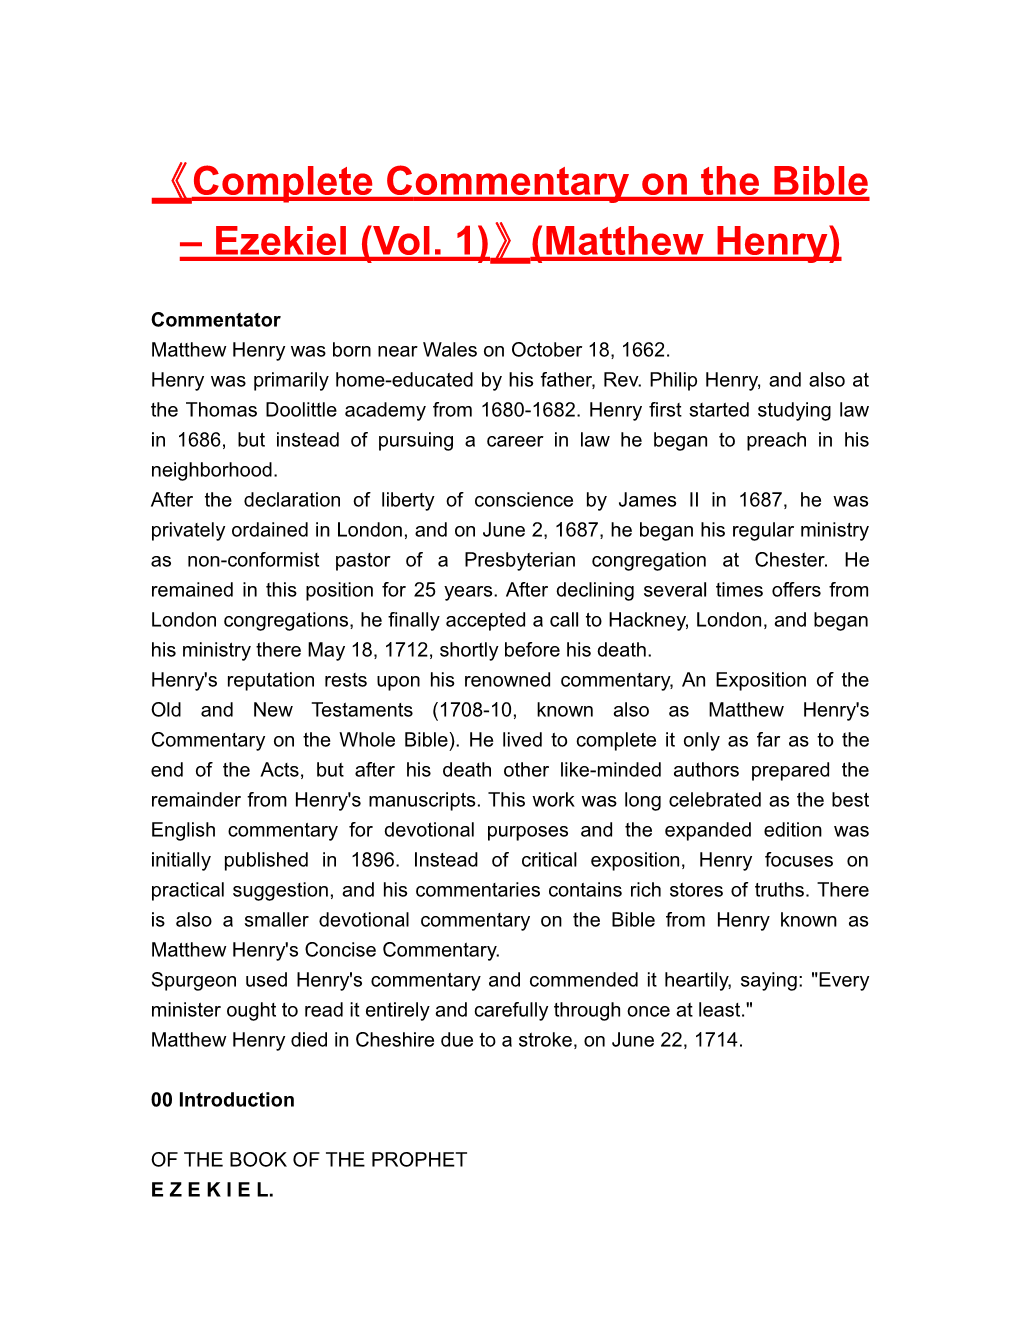 Completecommentary on the Bible Ezekiel (Vol. 1) (Matthew Henry)